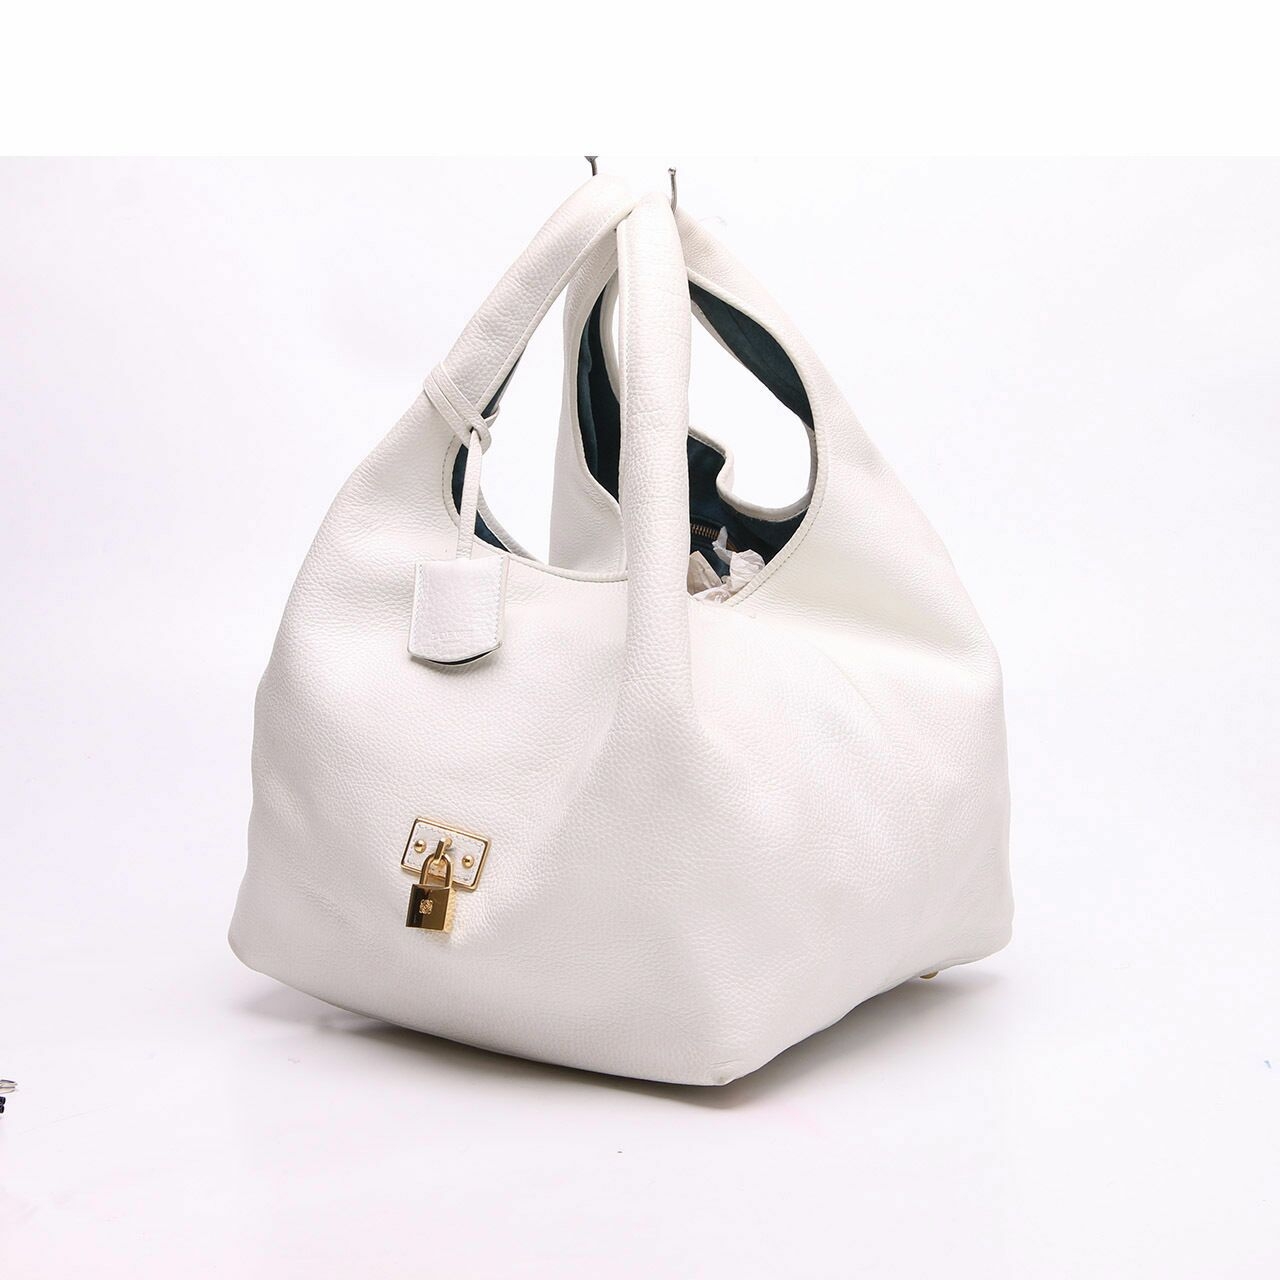 Loewe Calle Lock White Leather Hobo Shoulder Bag